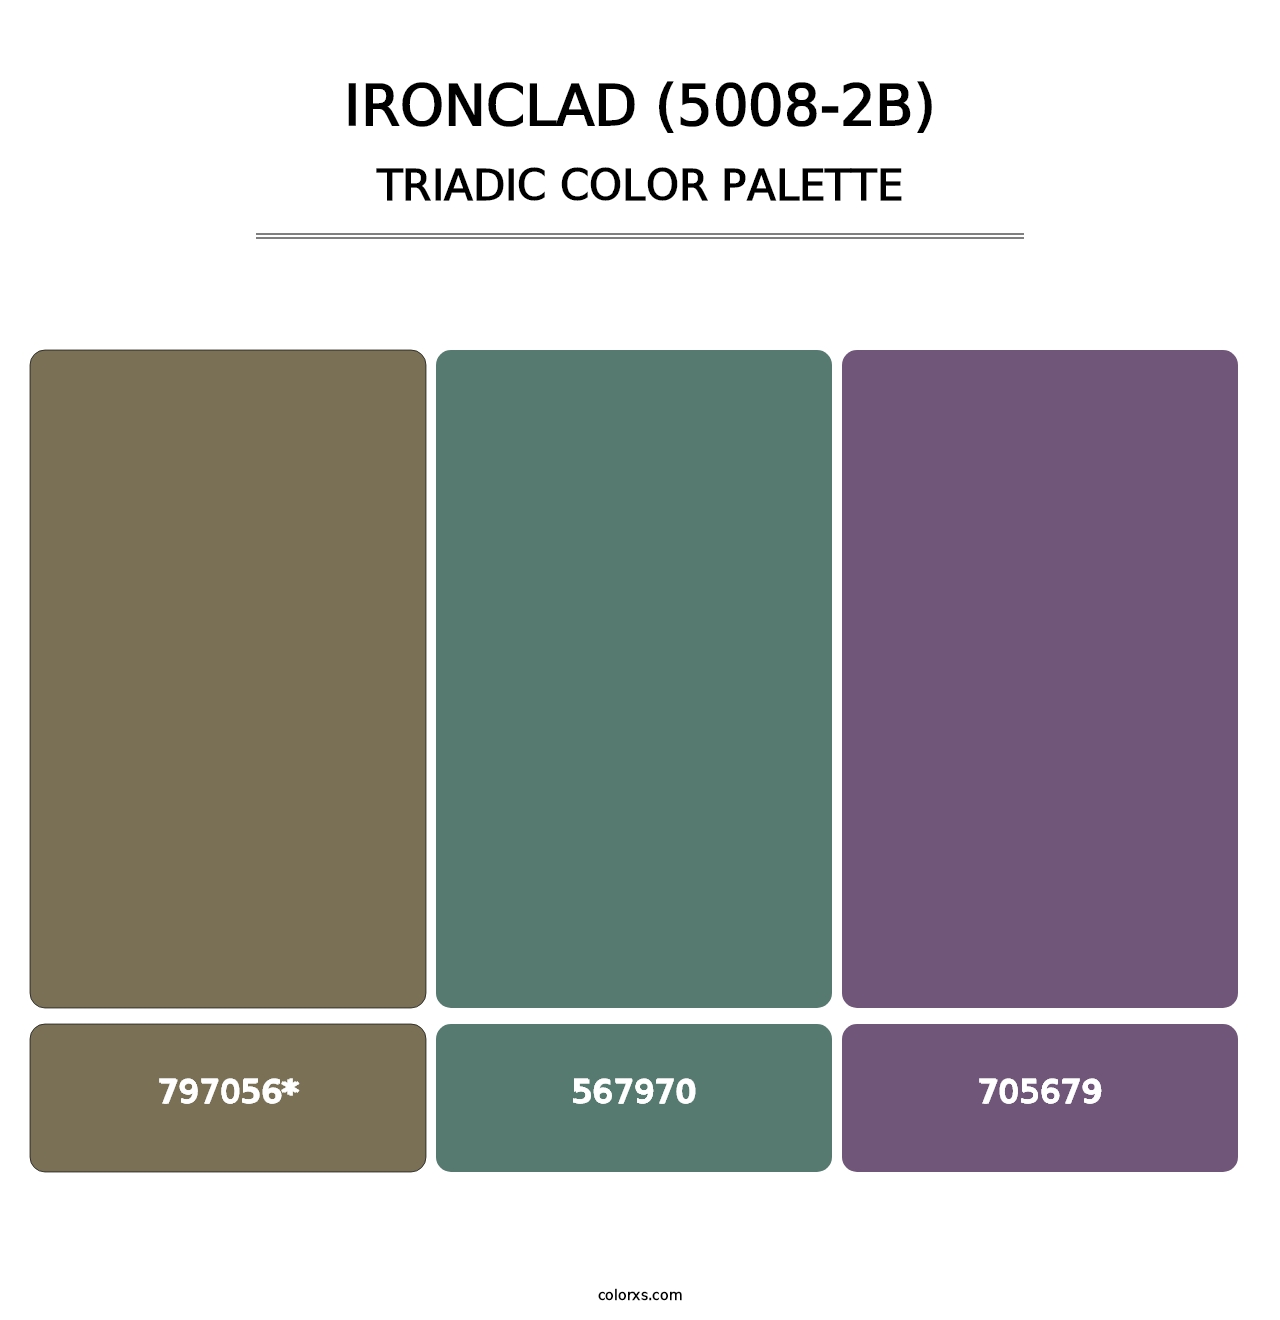 Ironclad (5008-2B) - Triadic Color Palette